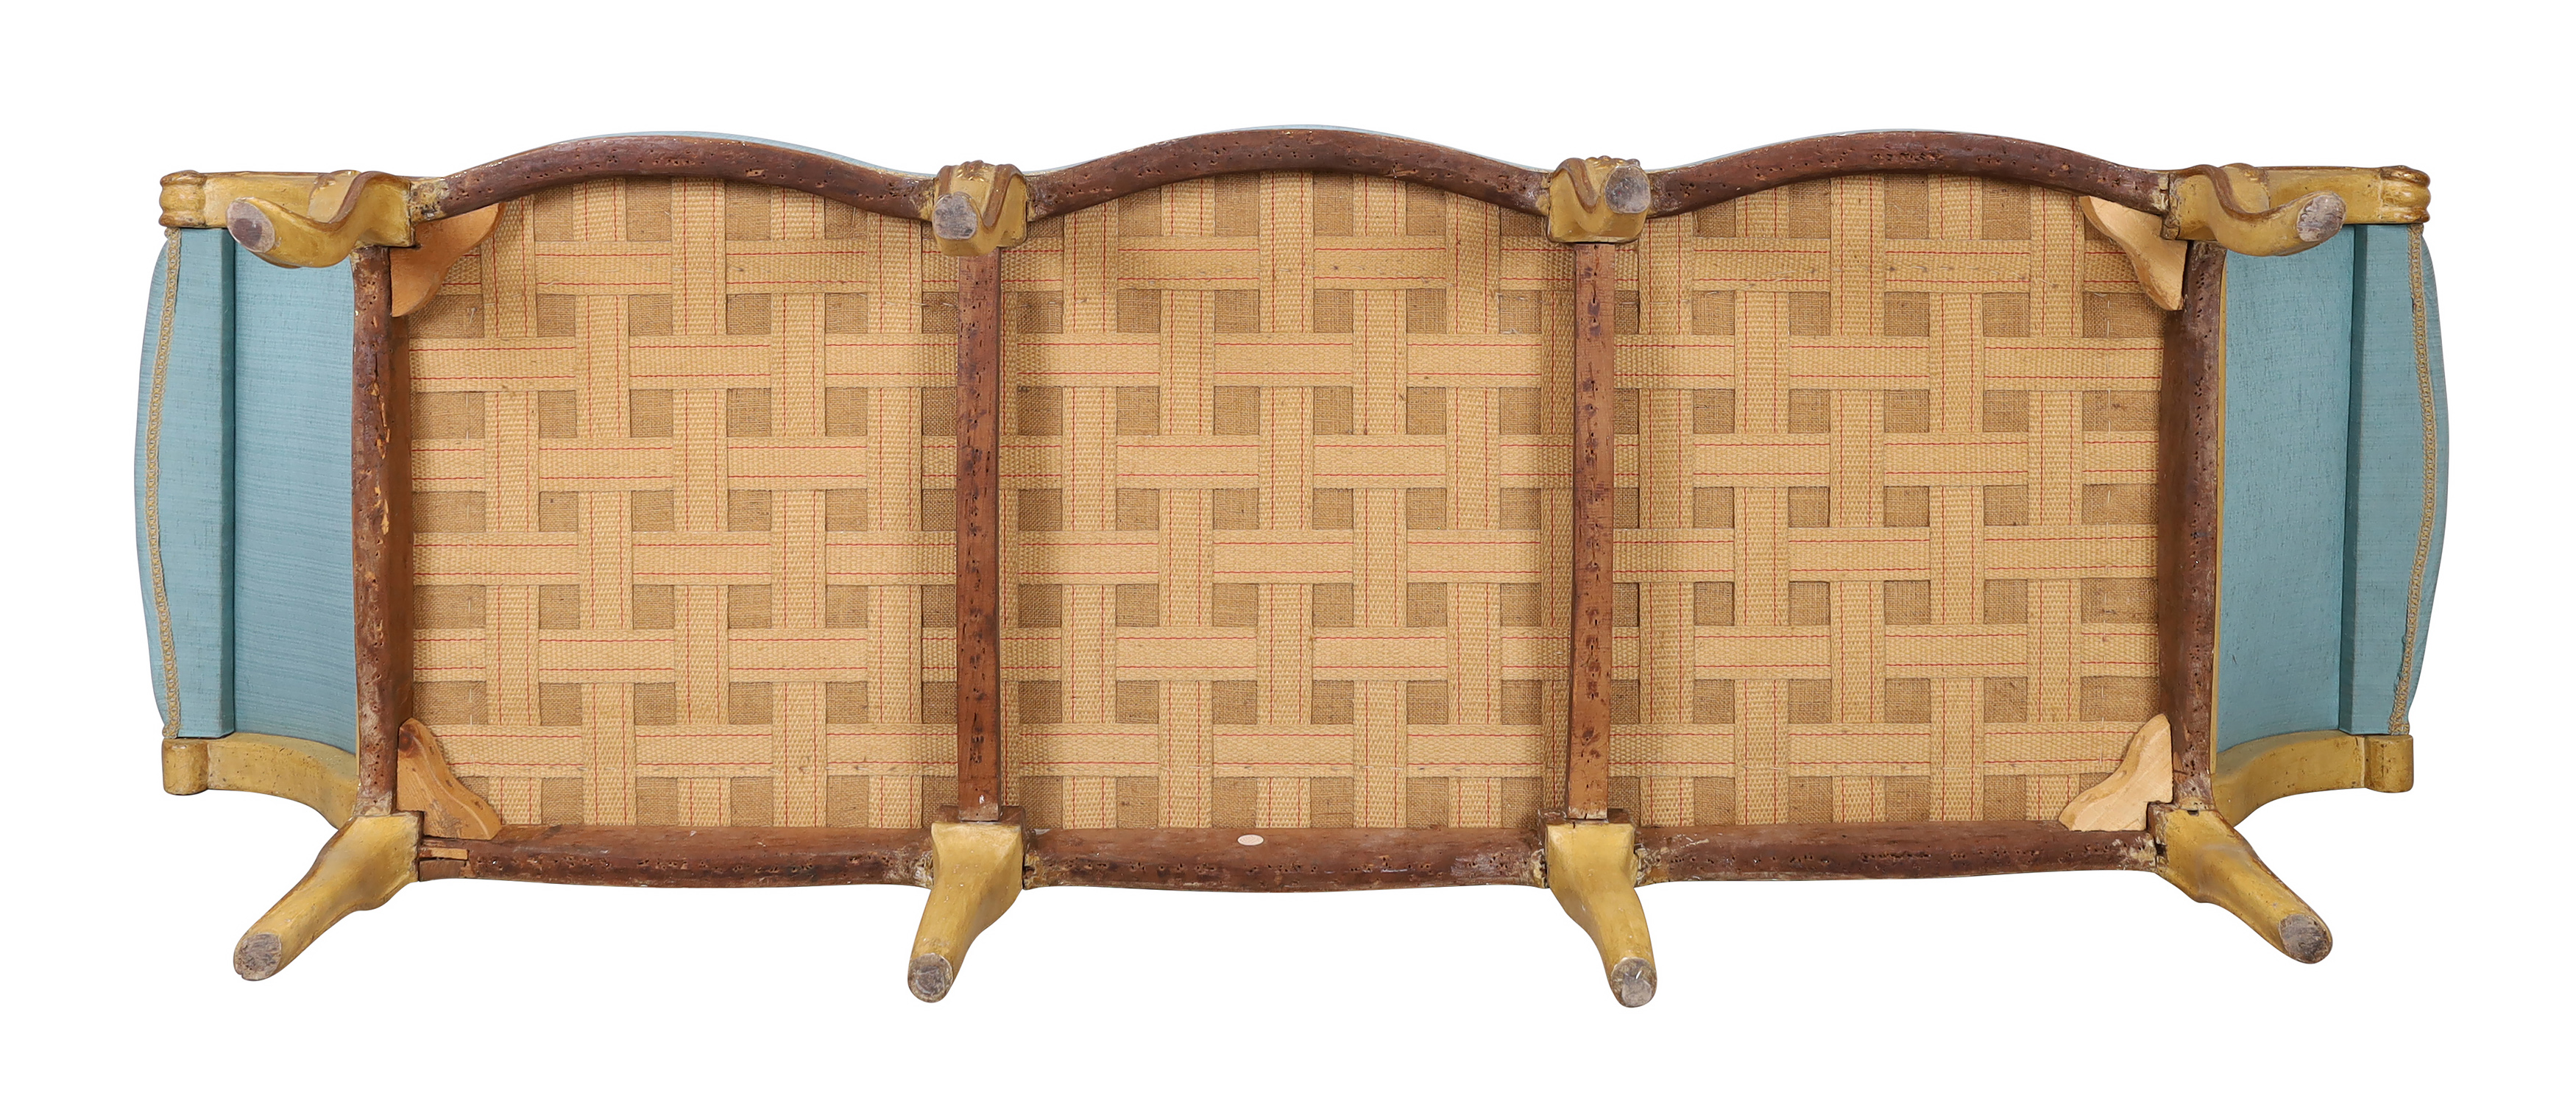 A North Italian parcel-gilt and cream painted sofa, Piedmont, third quarter 18th century, the ser... - Image 3 of 3